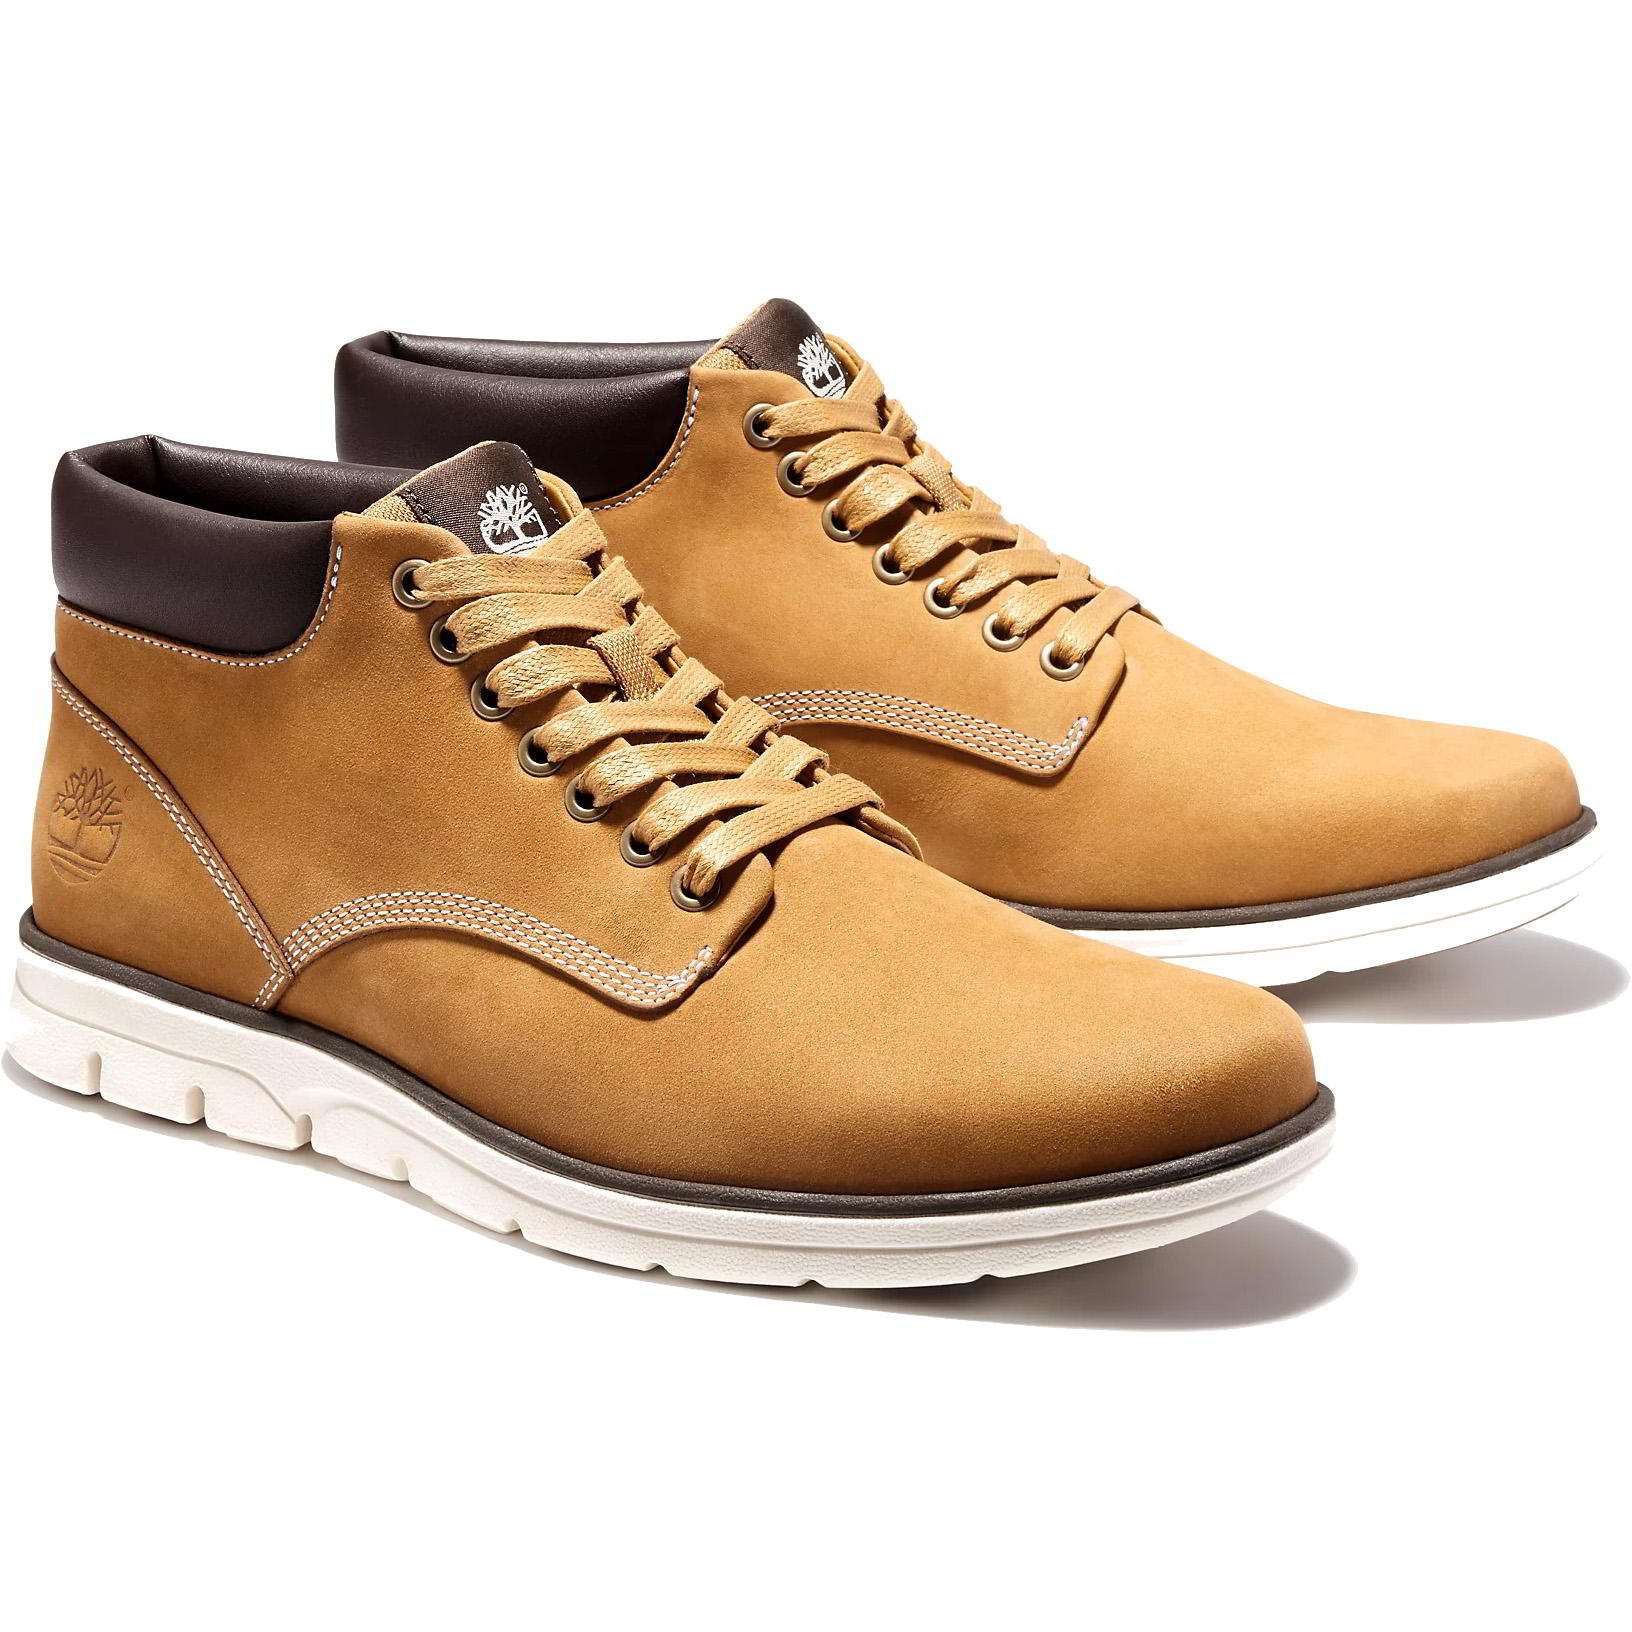 Timberland Men's Bradstreet Chukka Leather Ankle Boots - UK 8.5